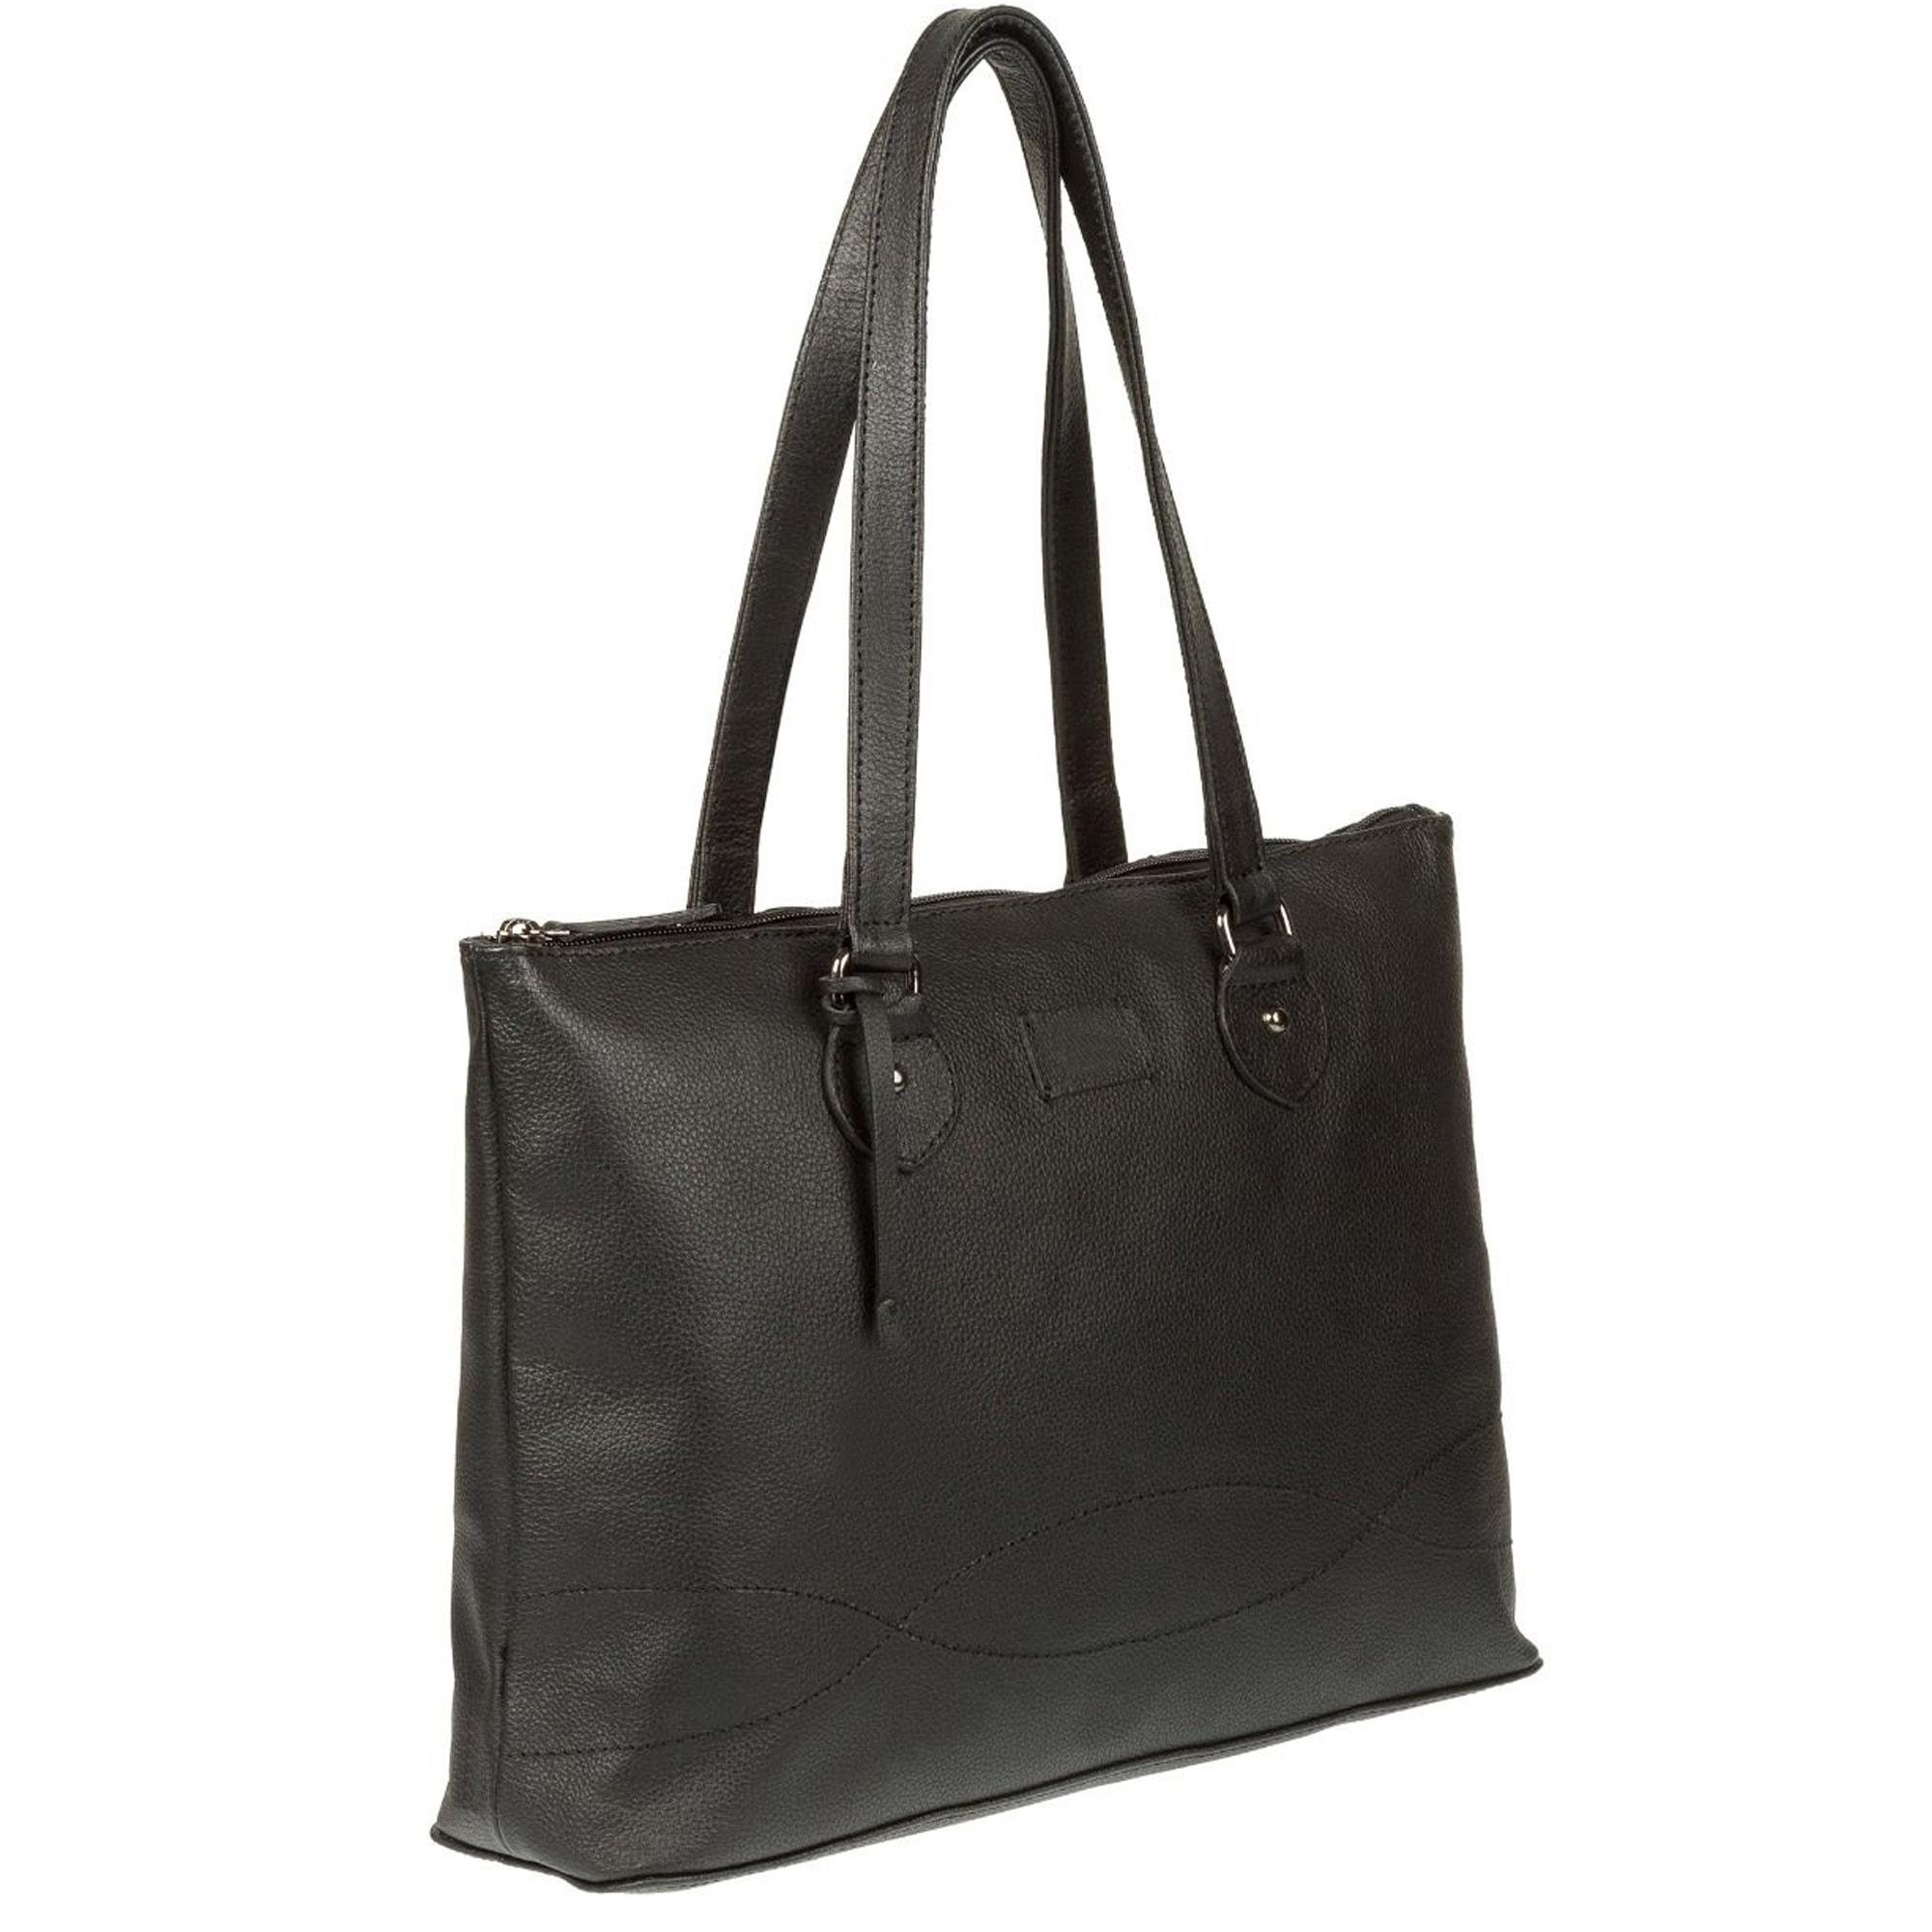 Black Leather handbag, Leather Tote